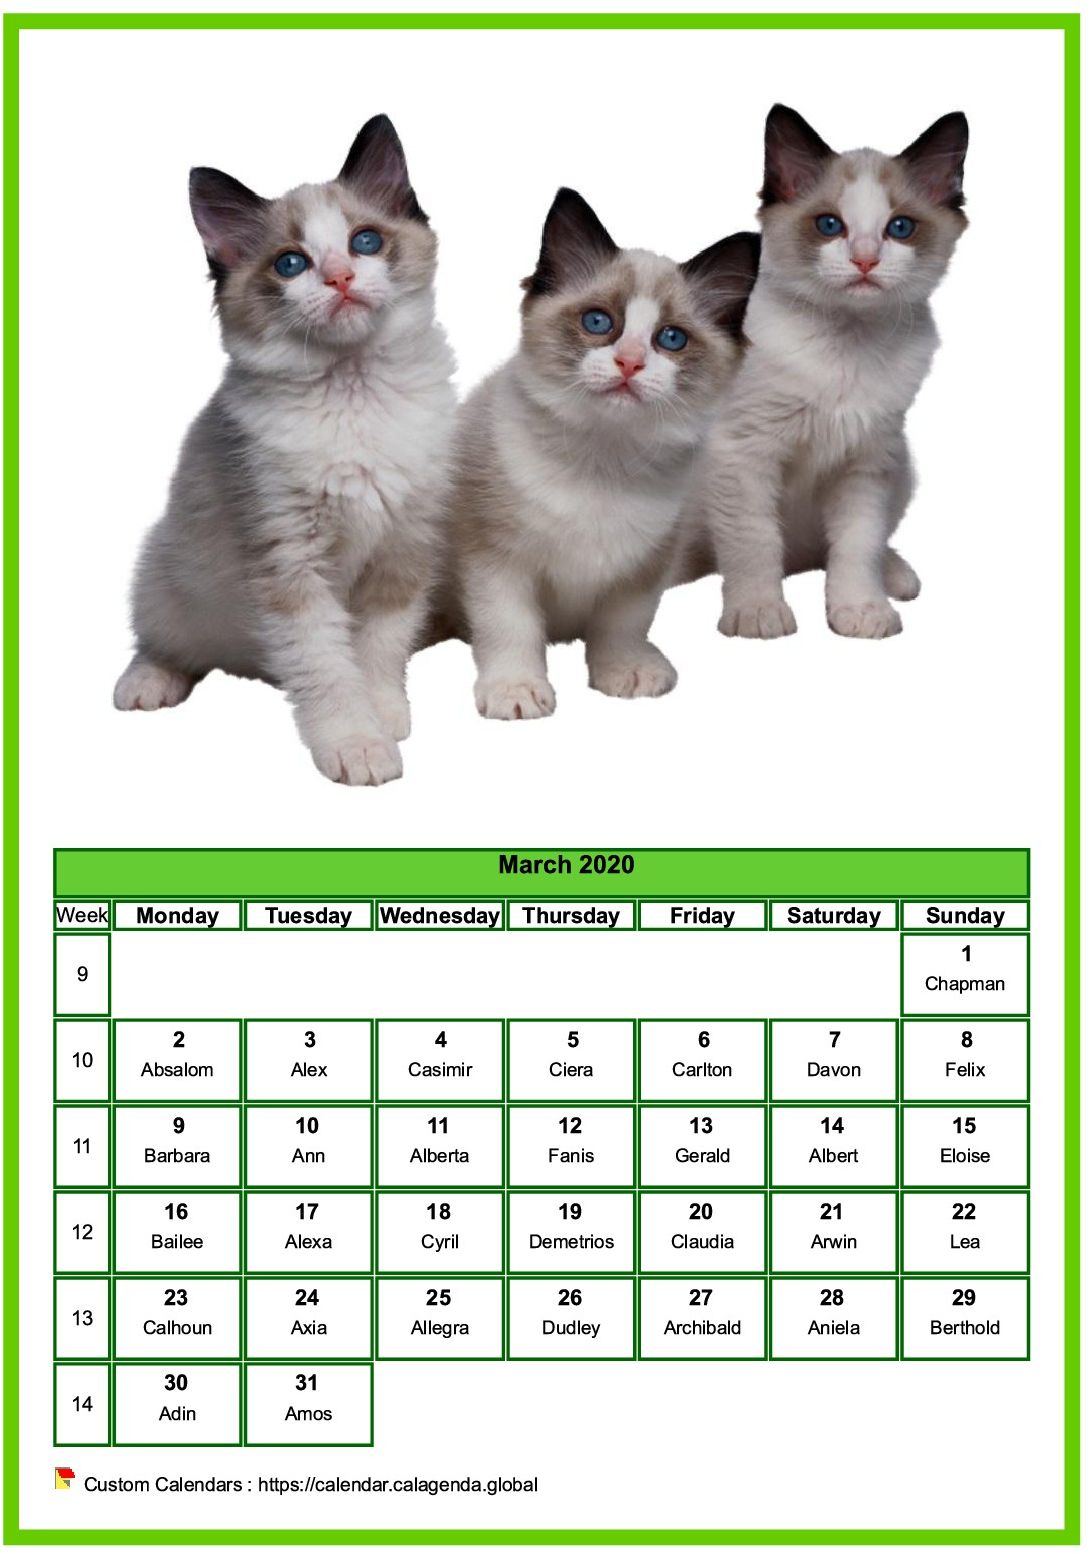 Calendar March 2020 cats